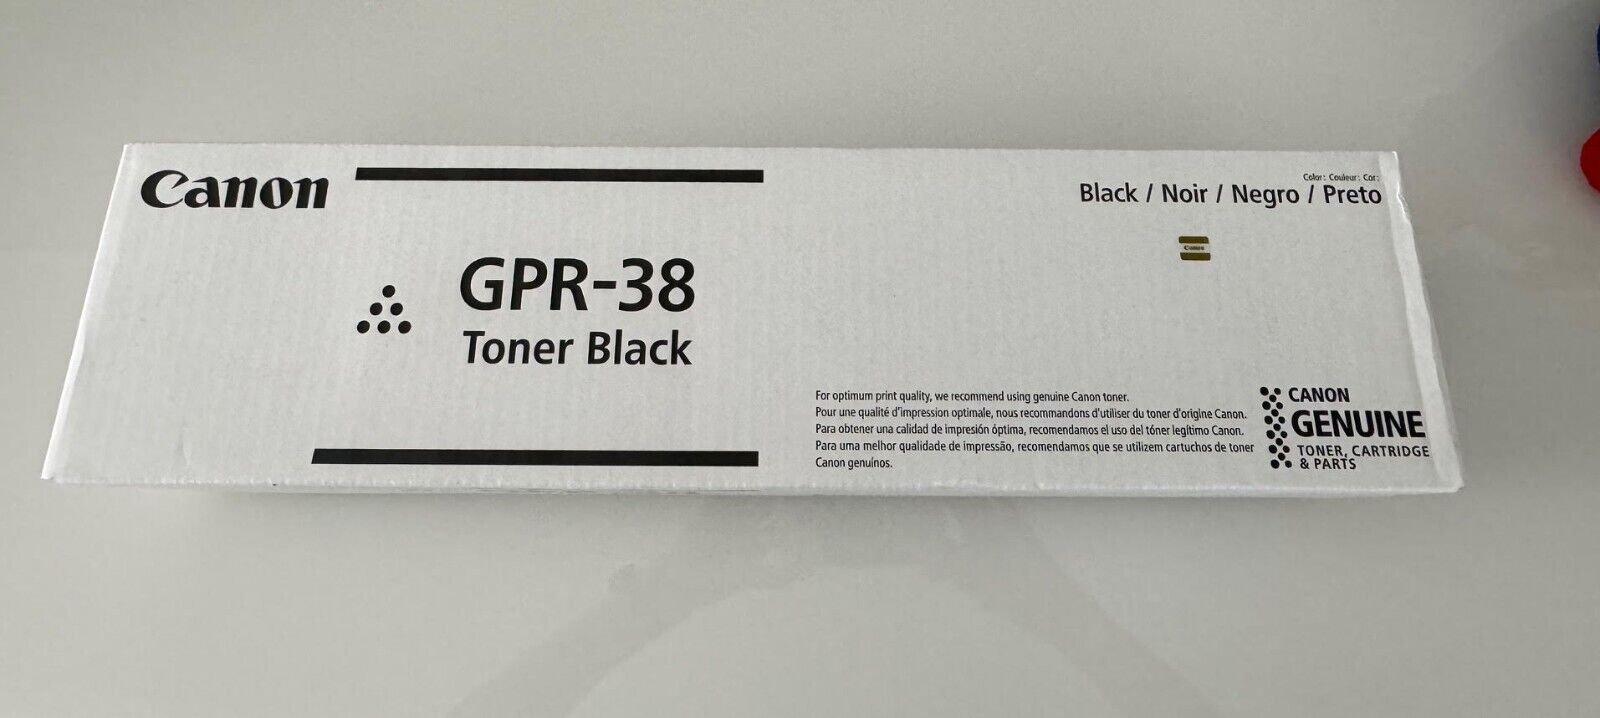 **Canon GPR -38 Toner Black - NEW ORIGINAL PACKAGING - **